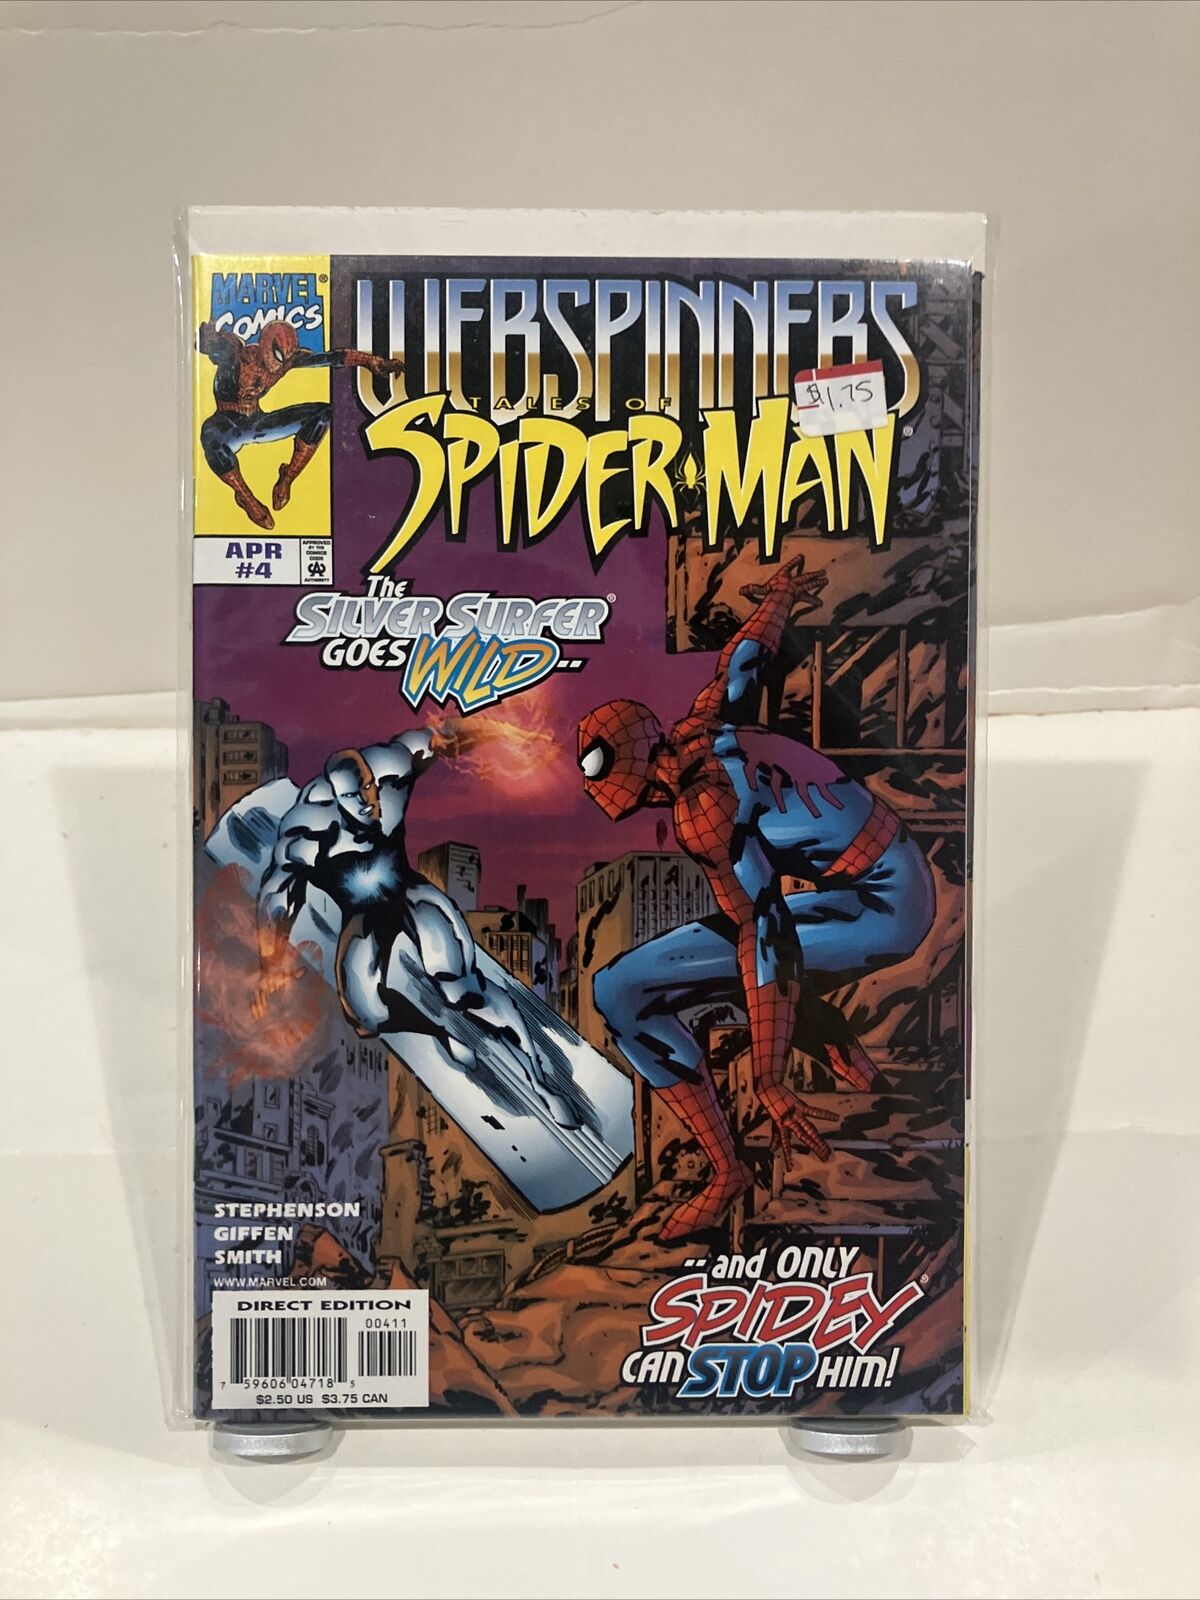 webspinners tales of spiderman 4